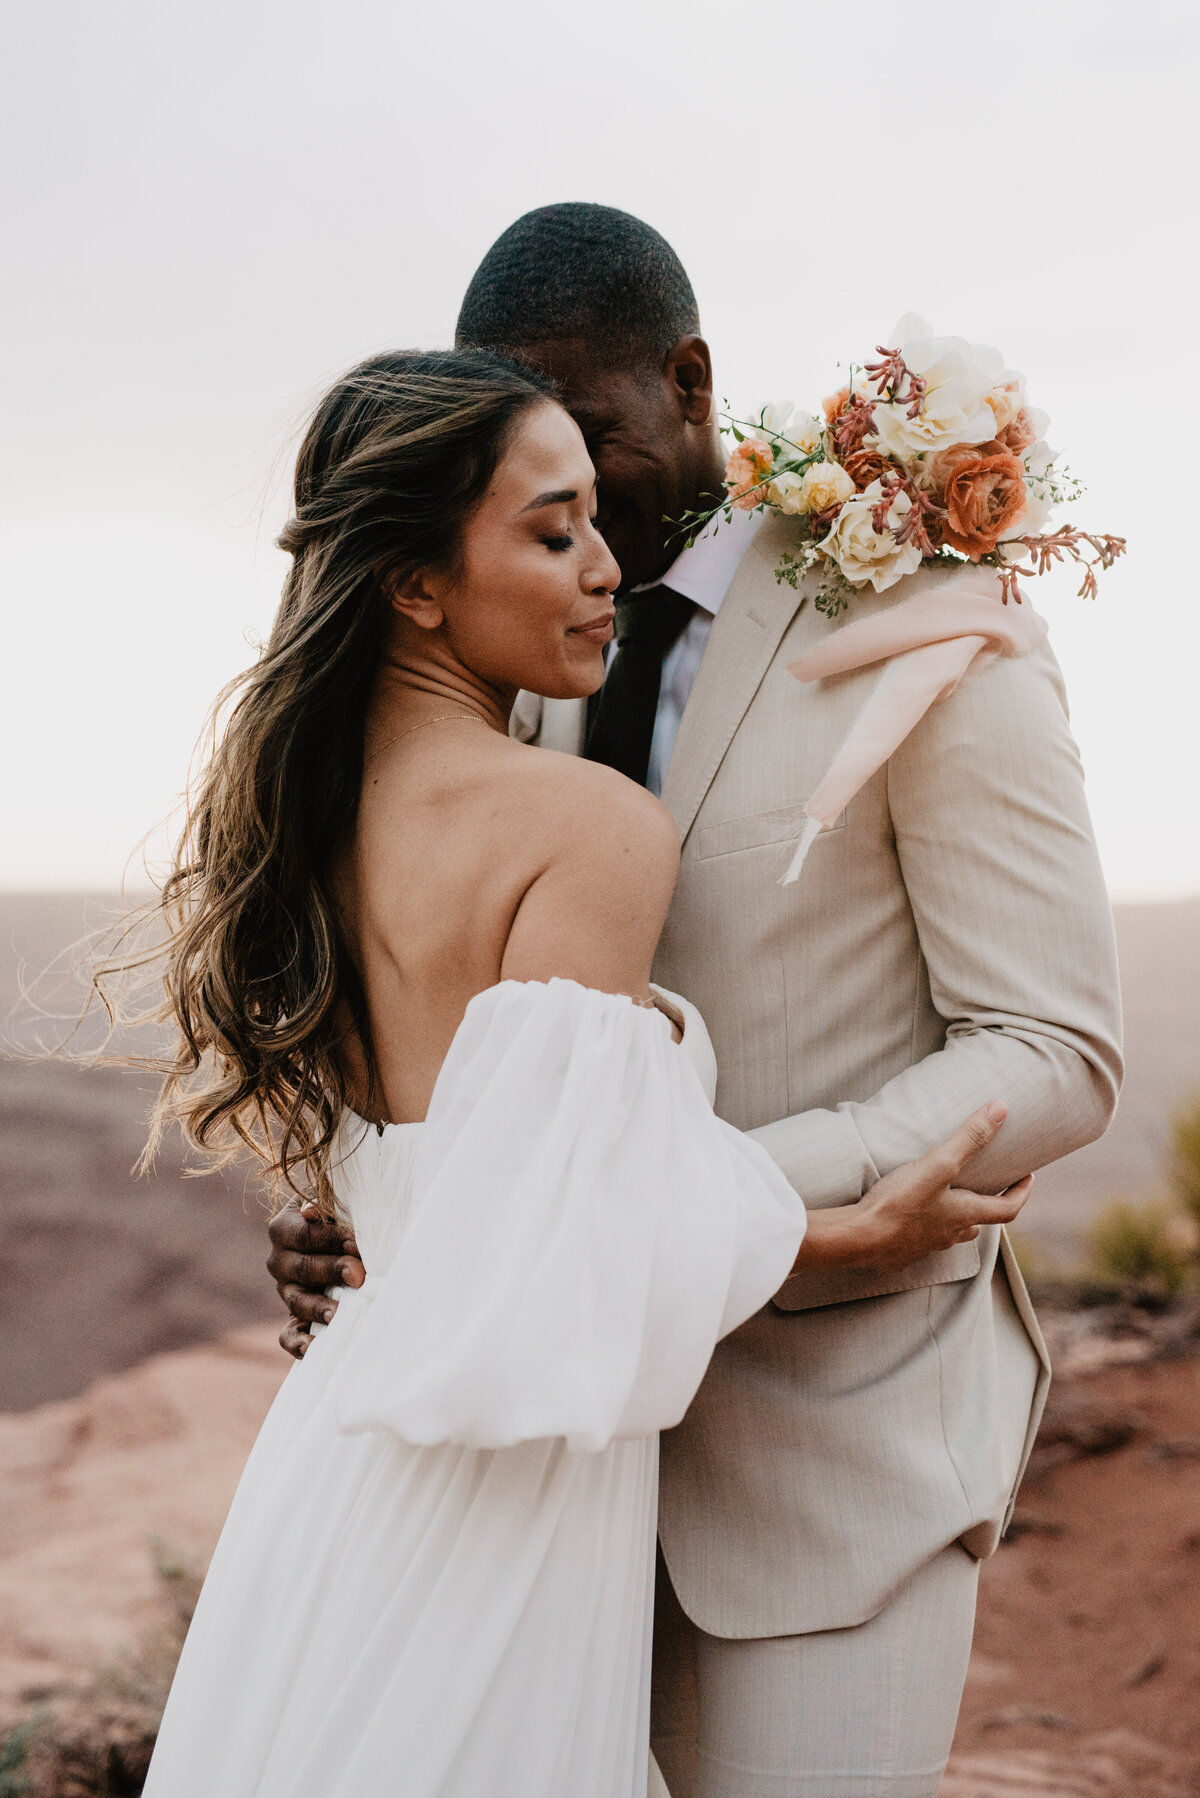 Utah Elopement Photographer captures couple hugging during wedding portraits